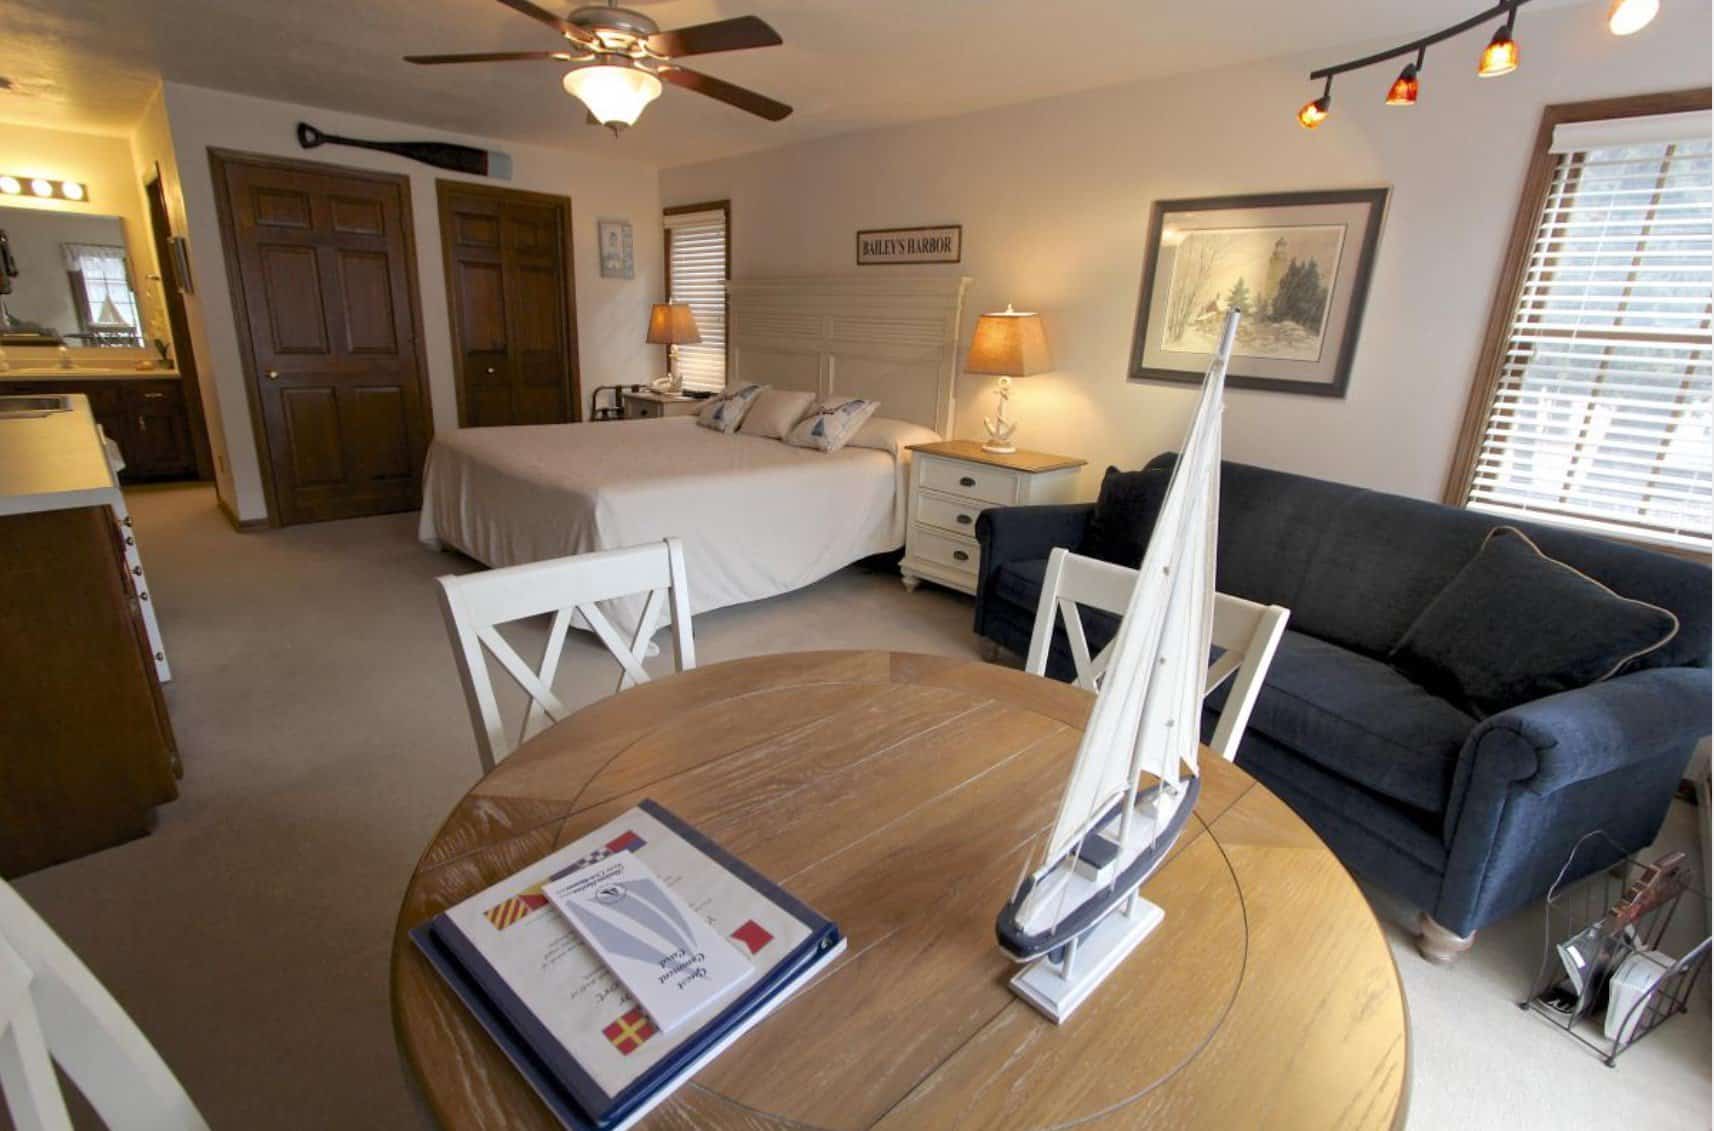 Bayfield yacht resort, a hotel room in bayfield, wisconsin